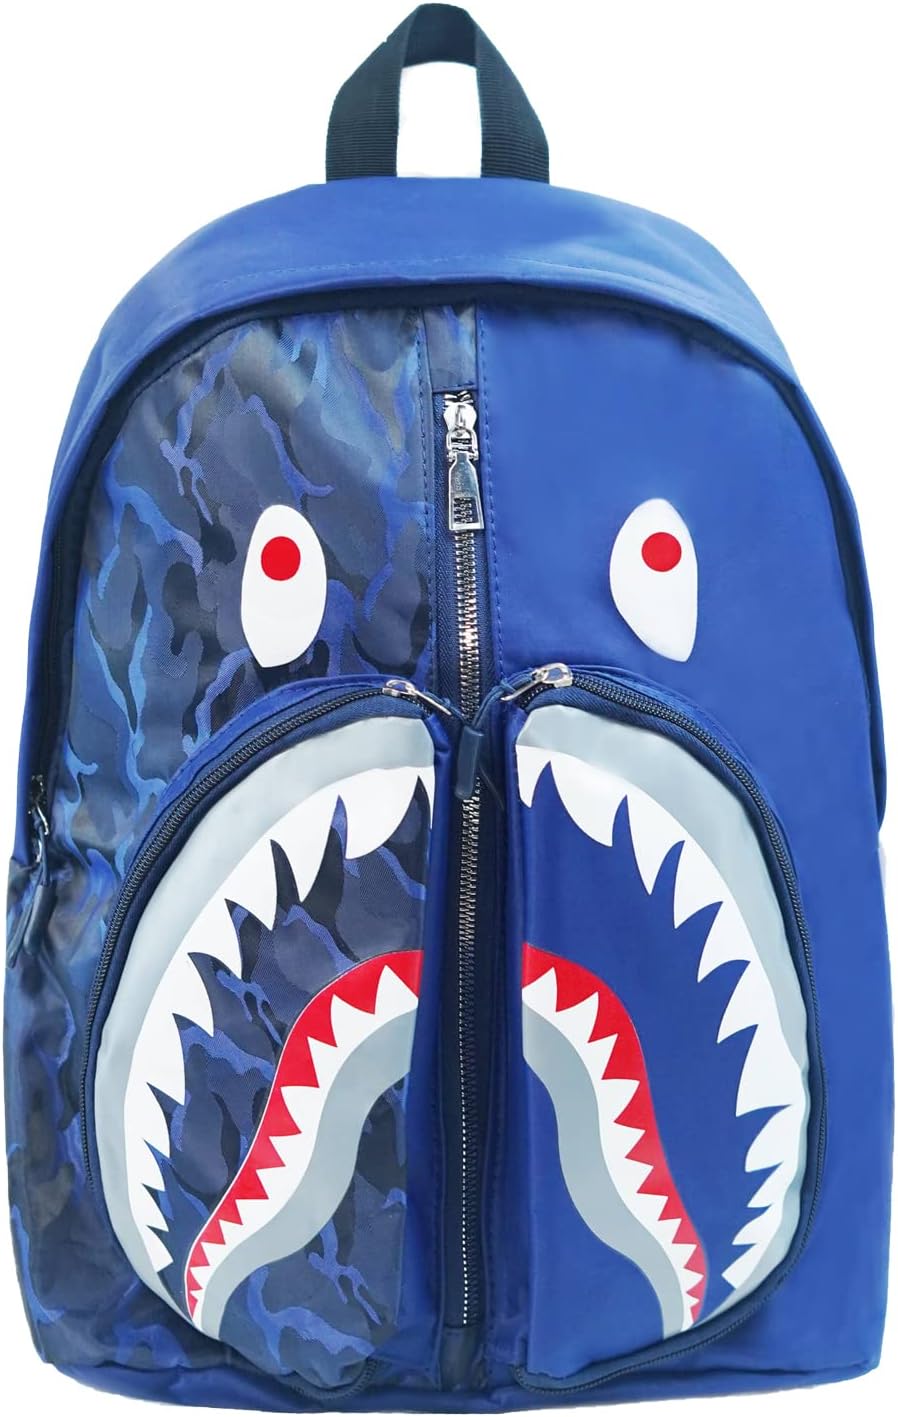 Backpacks Sprayground - Shark print backpack - B3237ANIMECAMO